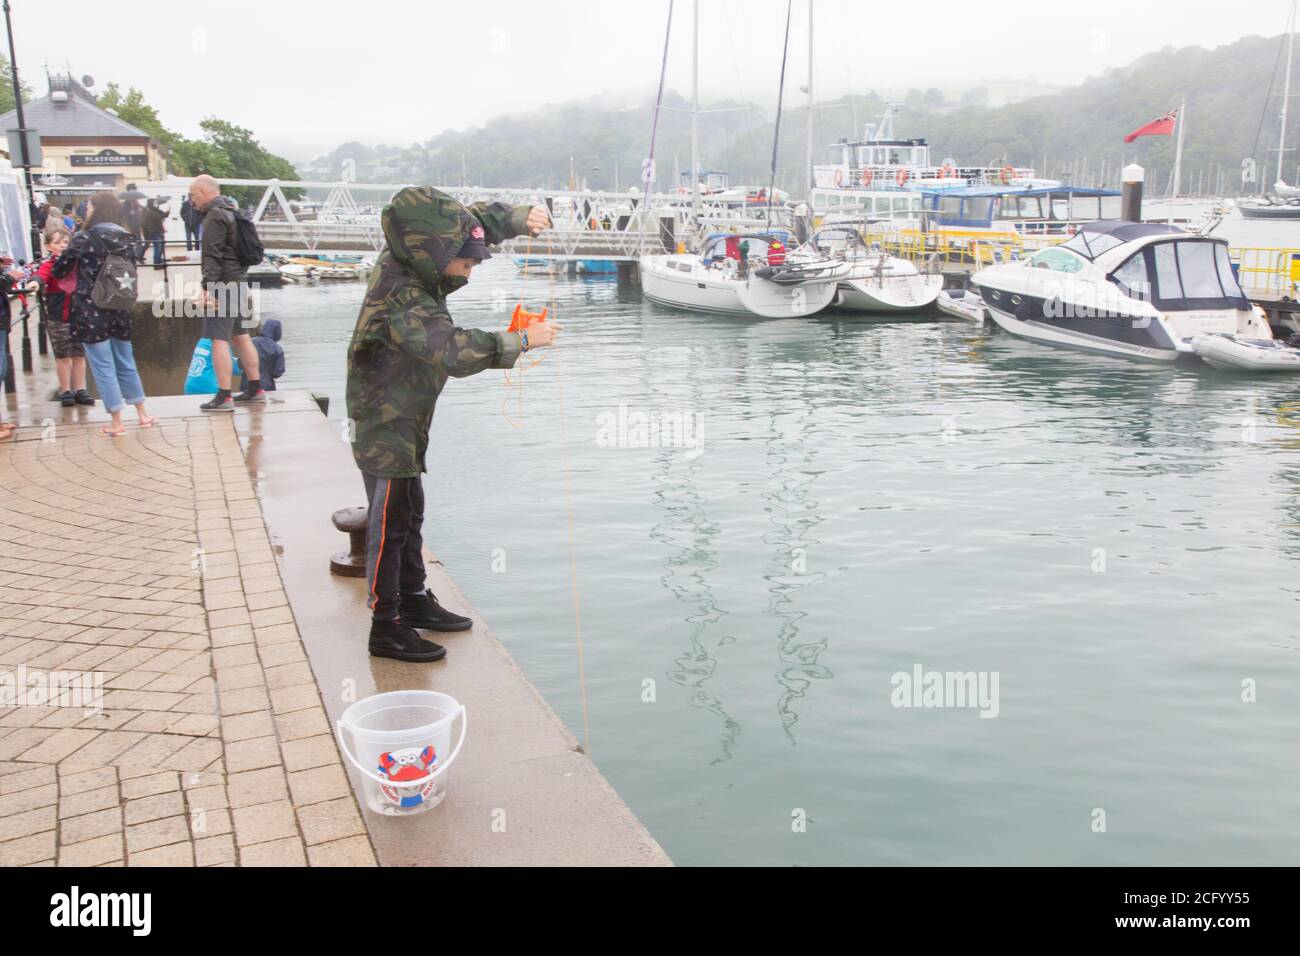 Eleven year old boy fishing for crabs Dartmouth, Devon, England, United Kingdom. Stock Photo